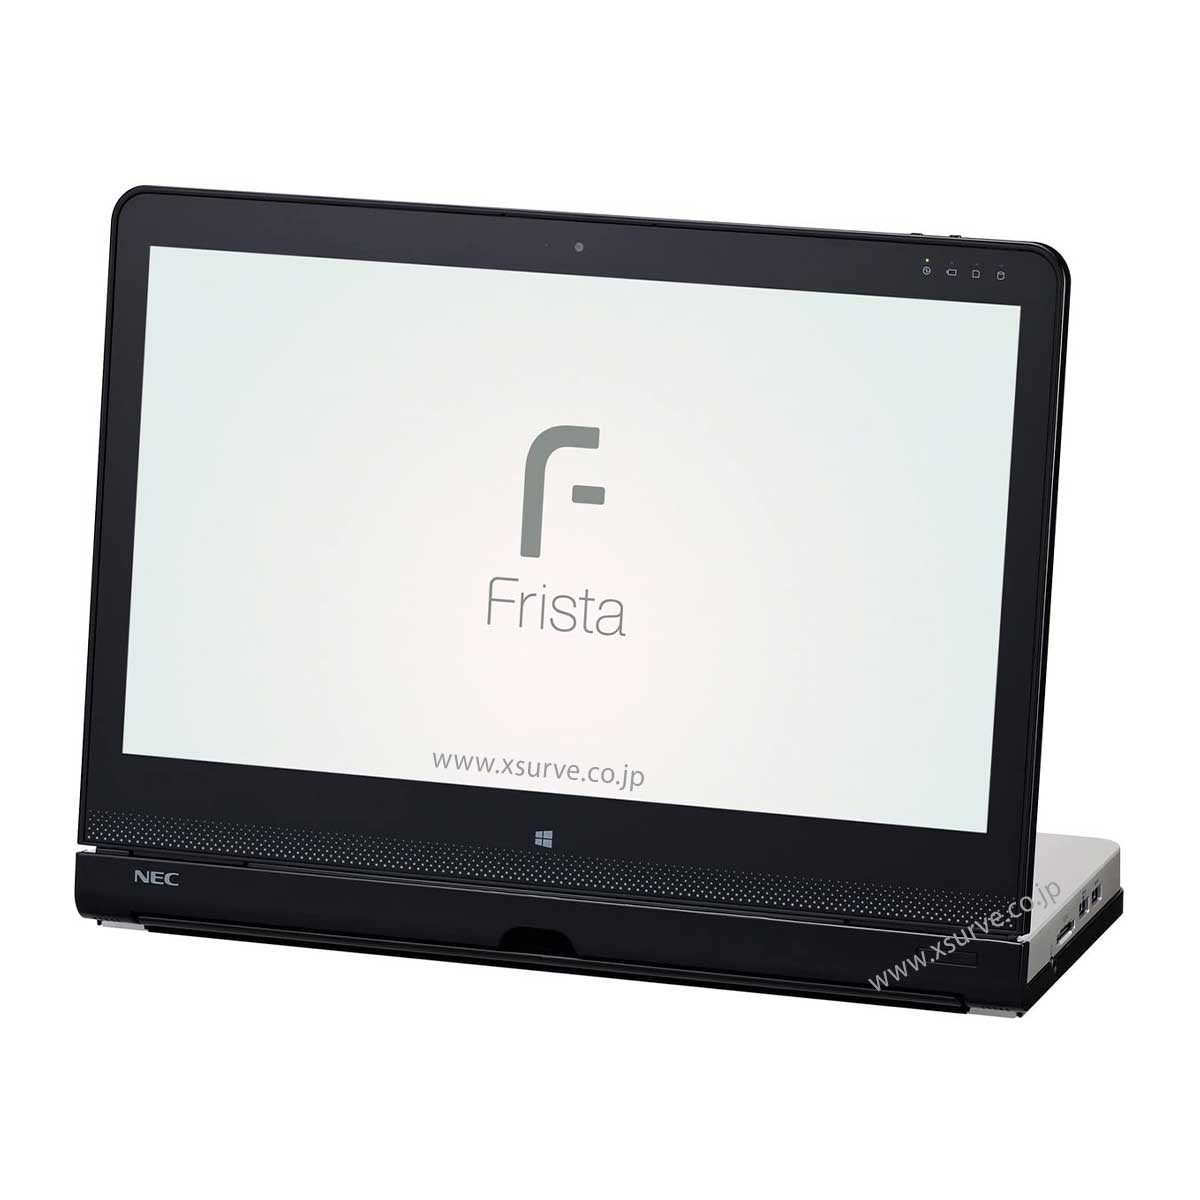 Featured image for “LAVIE Hybrid Frista PC-HF750CAB ピュアブラック”